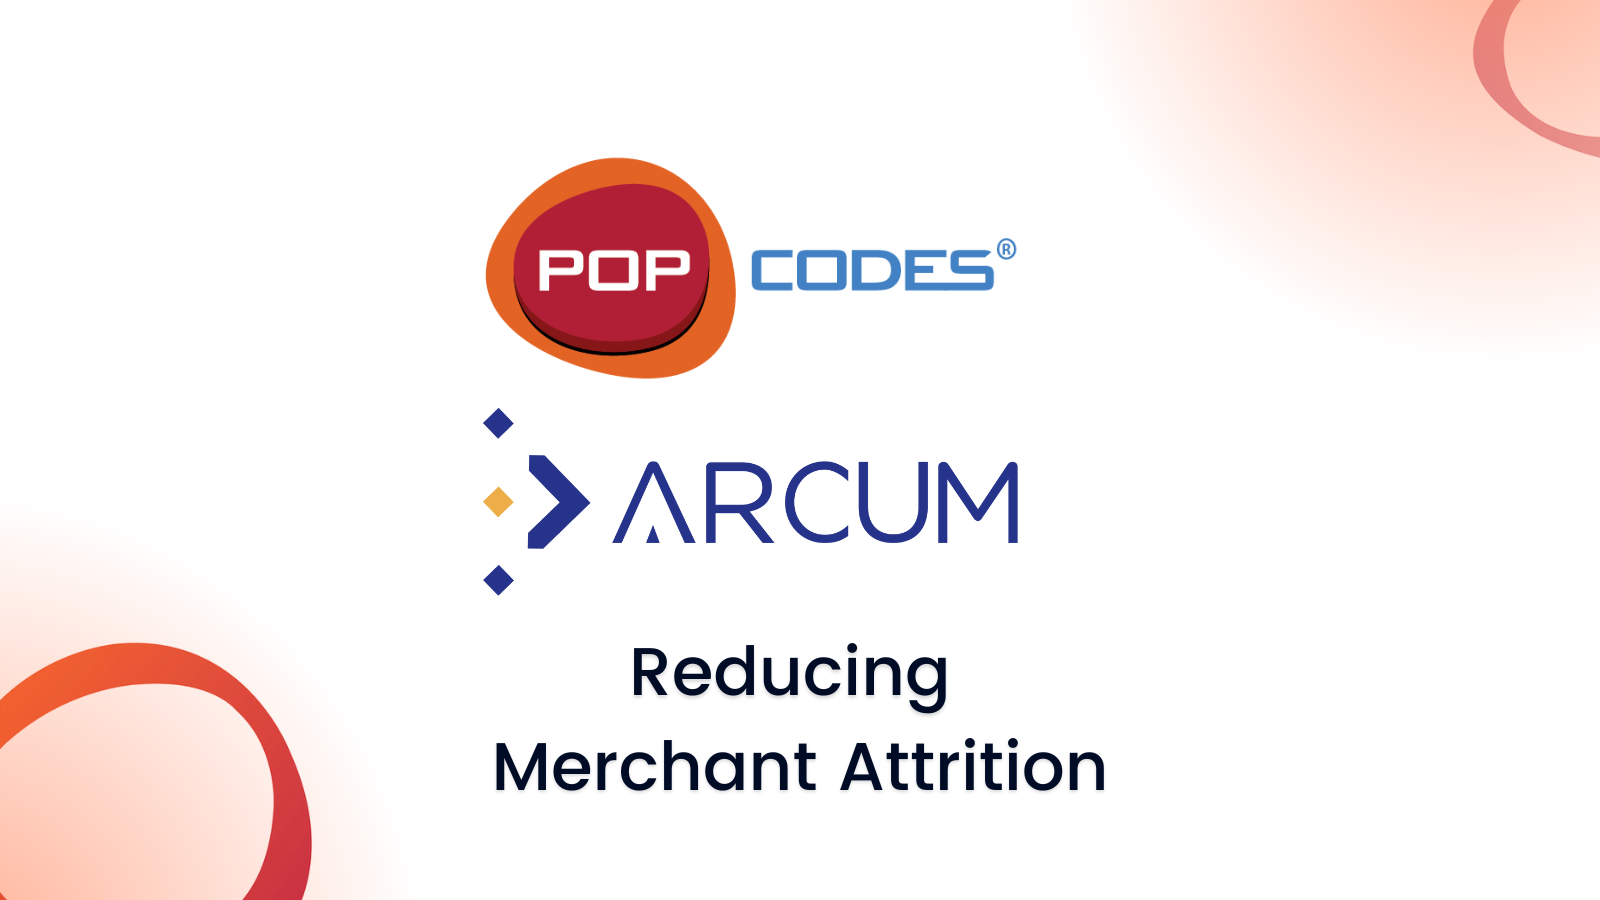 POPcodes and Arcum logos reducing merchant attrition